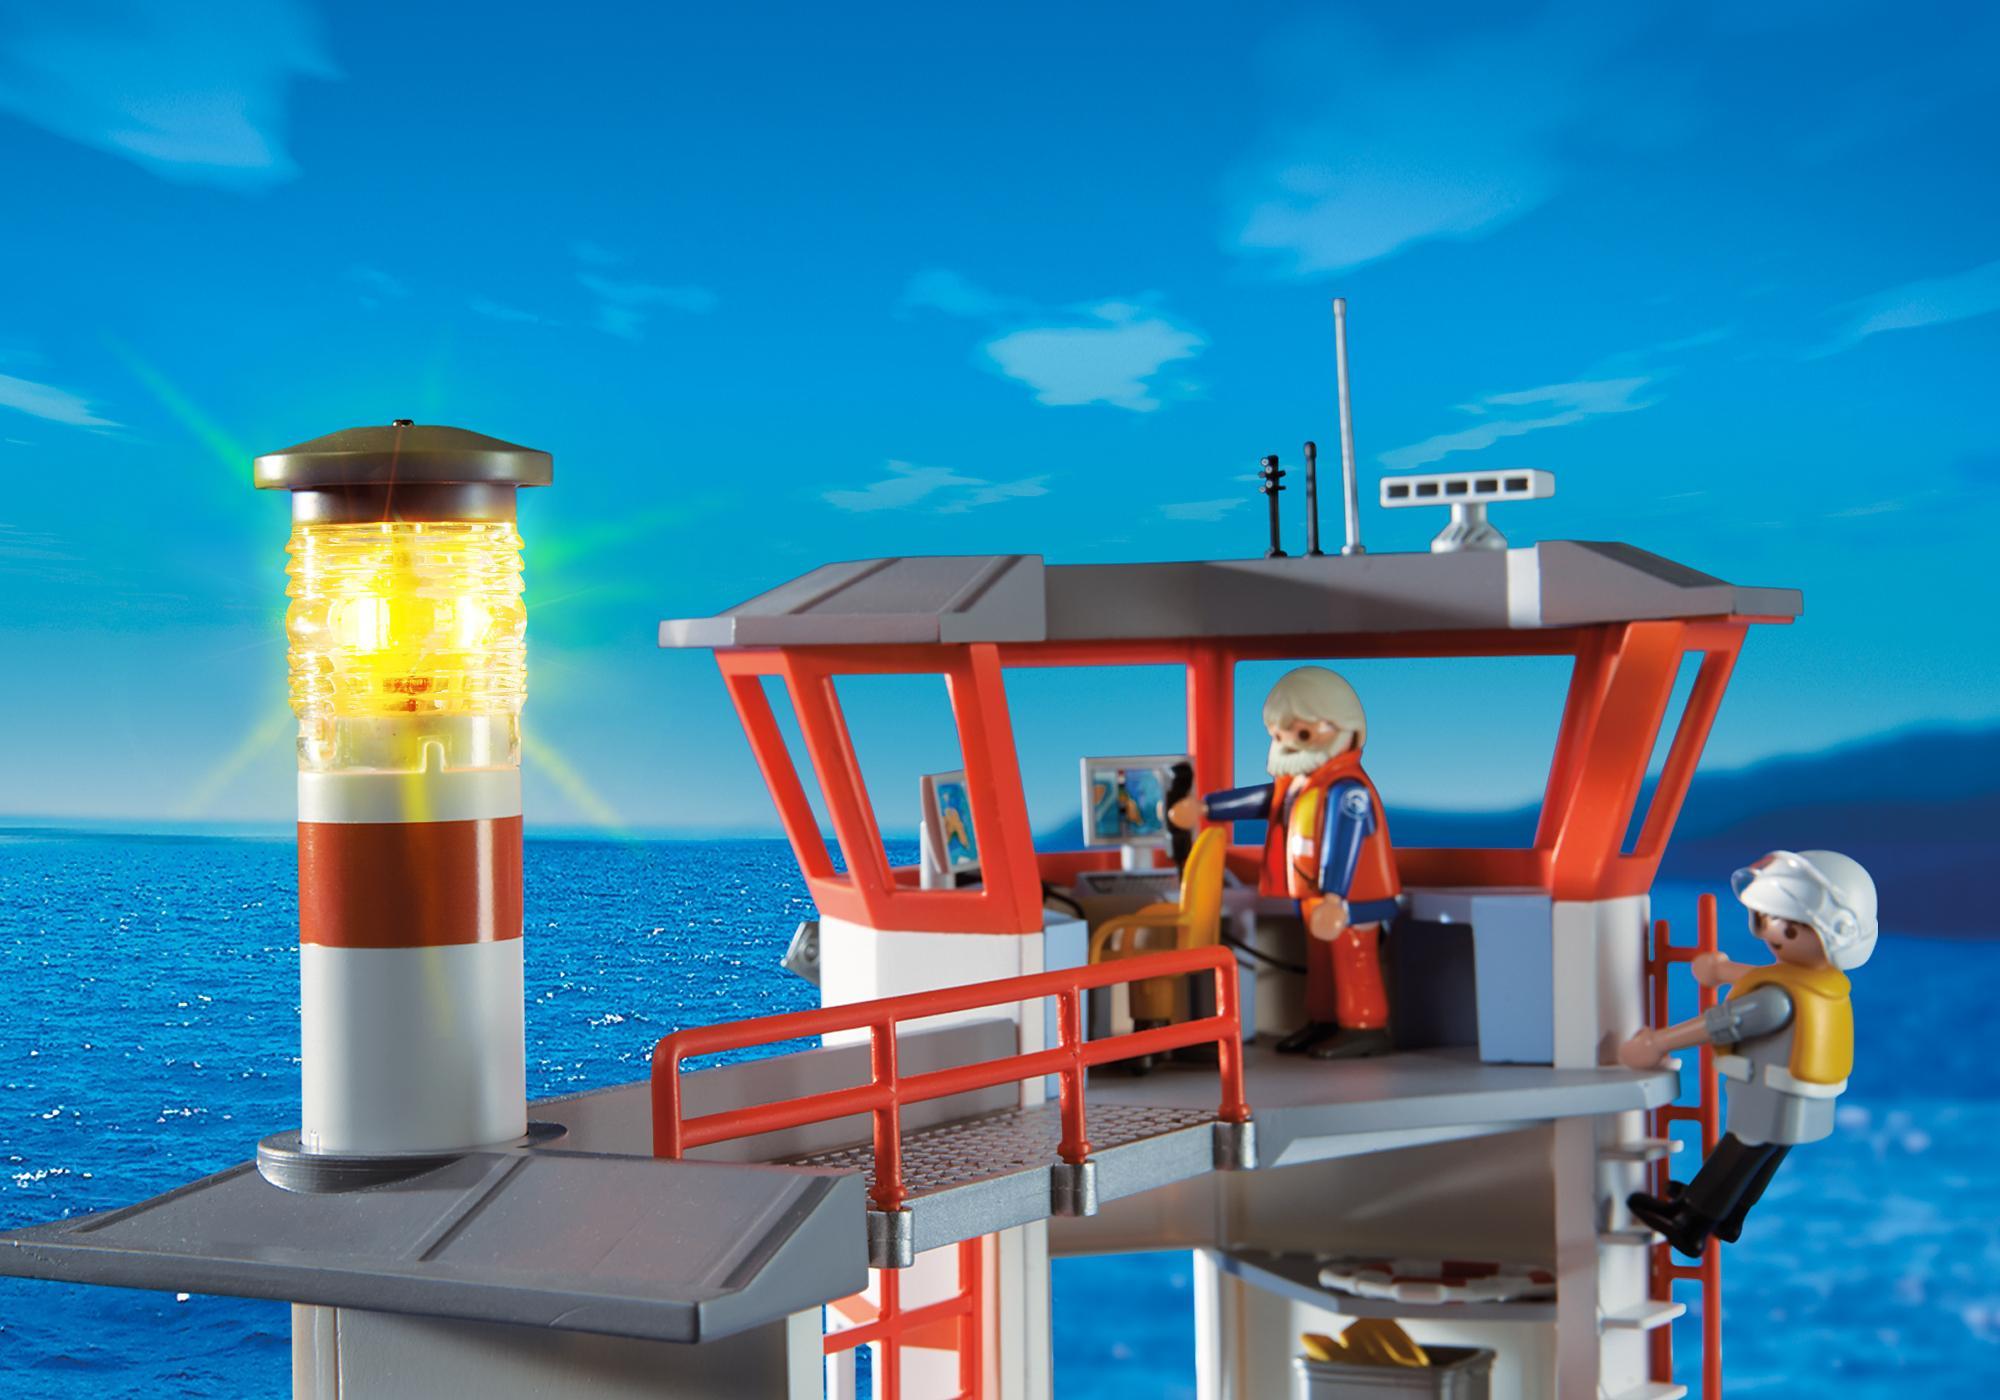 playmobil lifeboat station